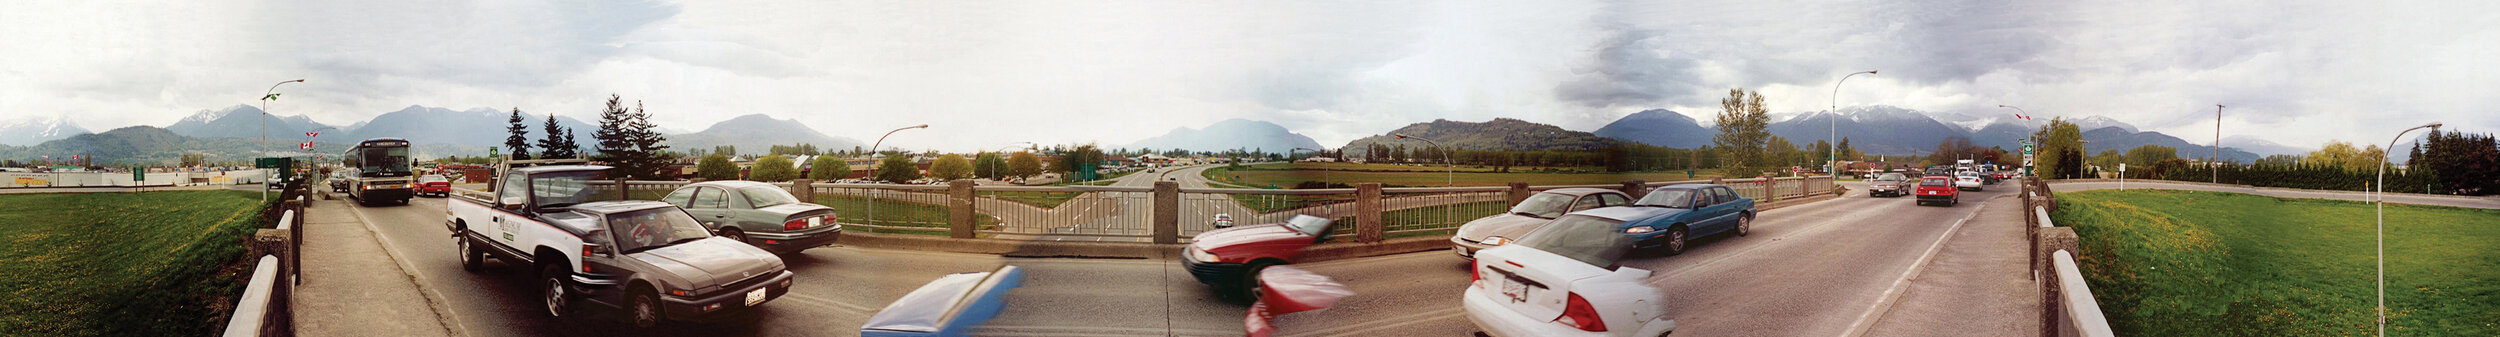 Chilliwack-Sardis Overpass, digital composite, 2002